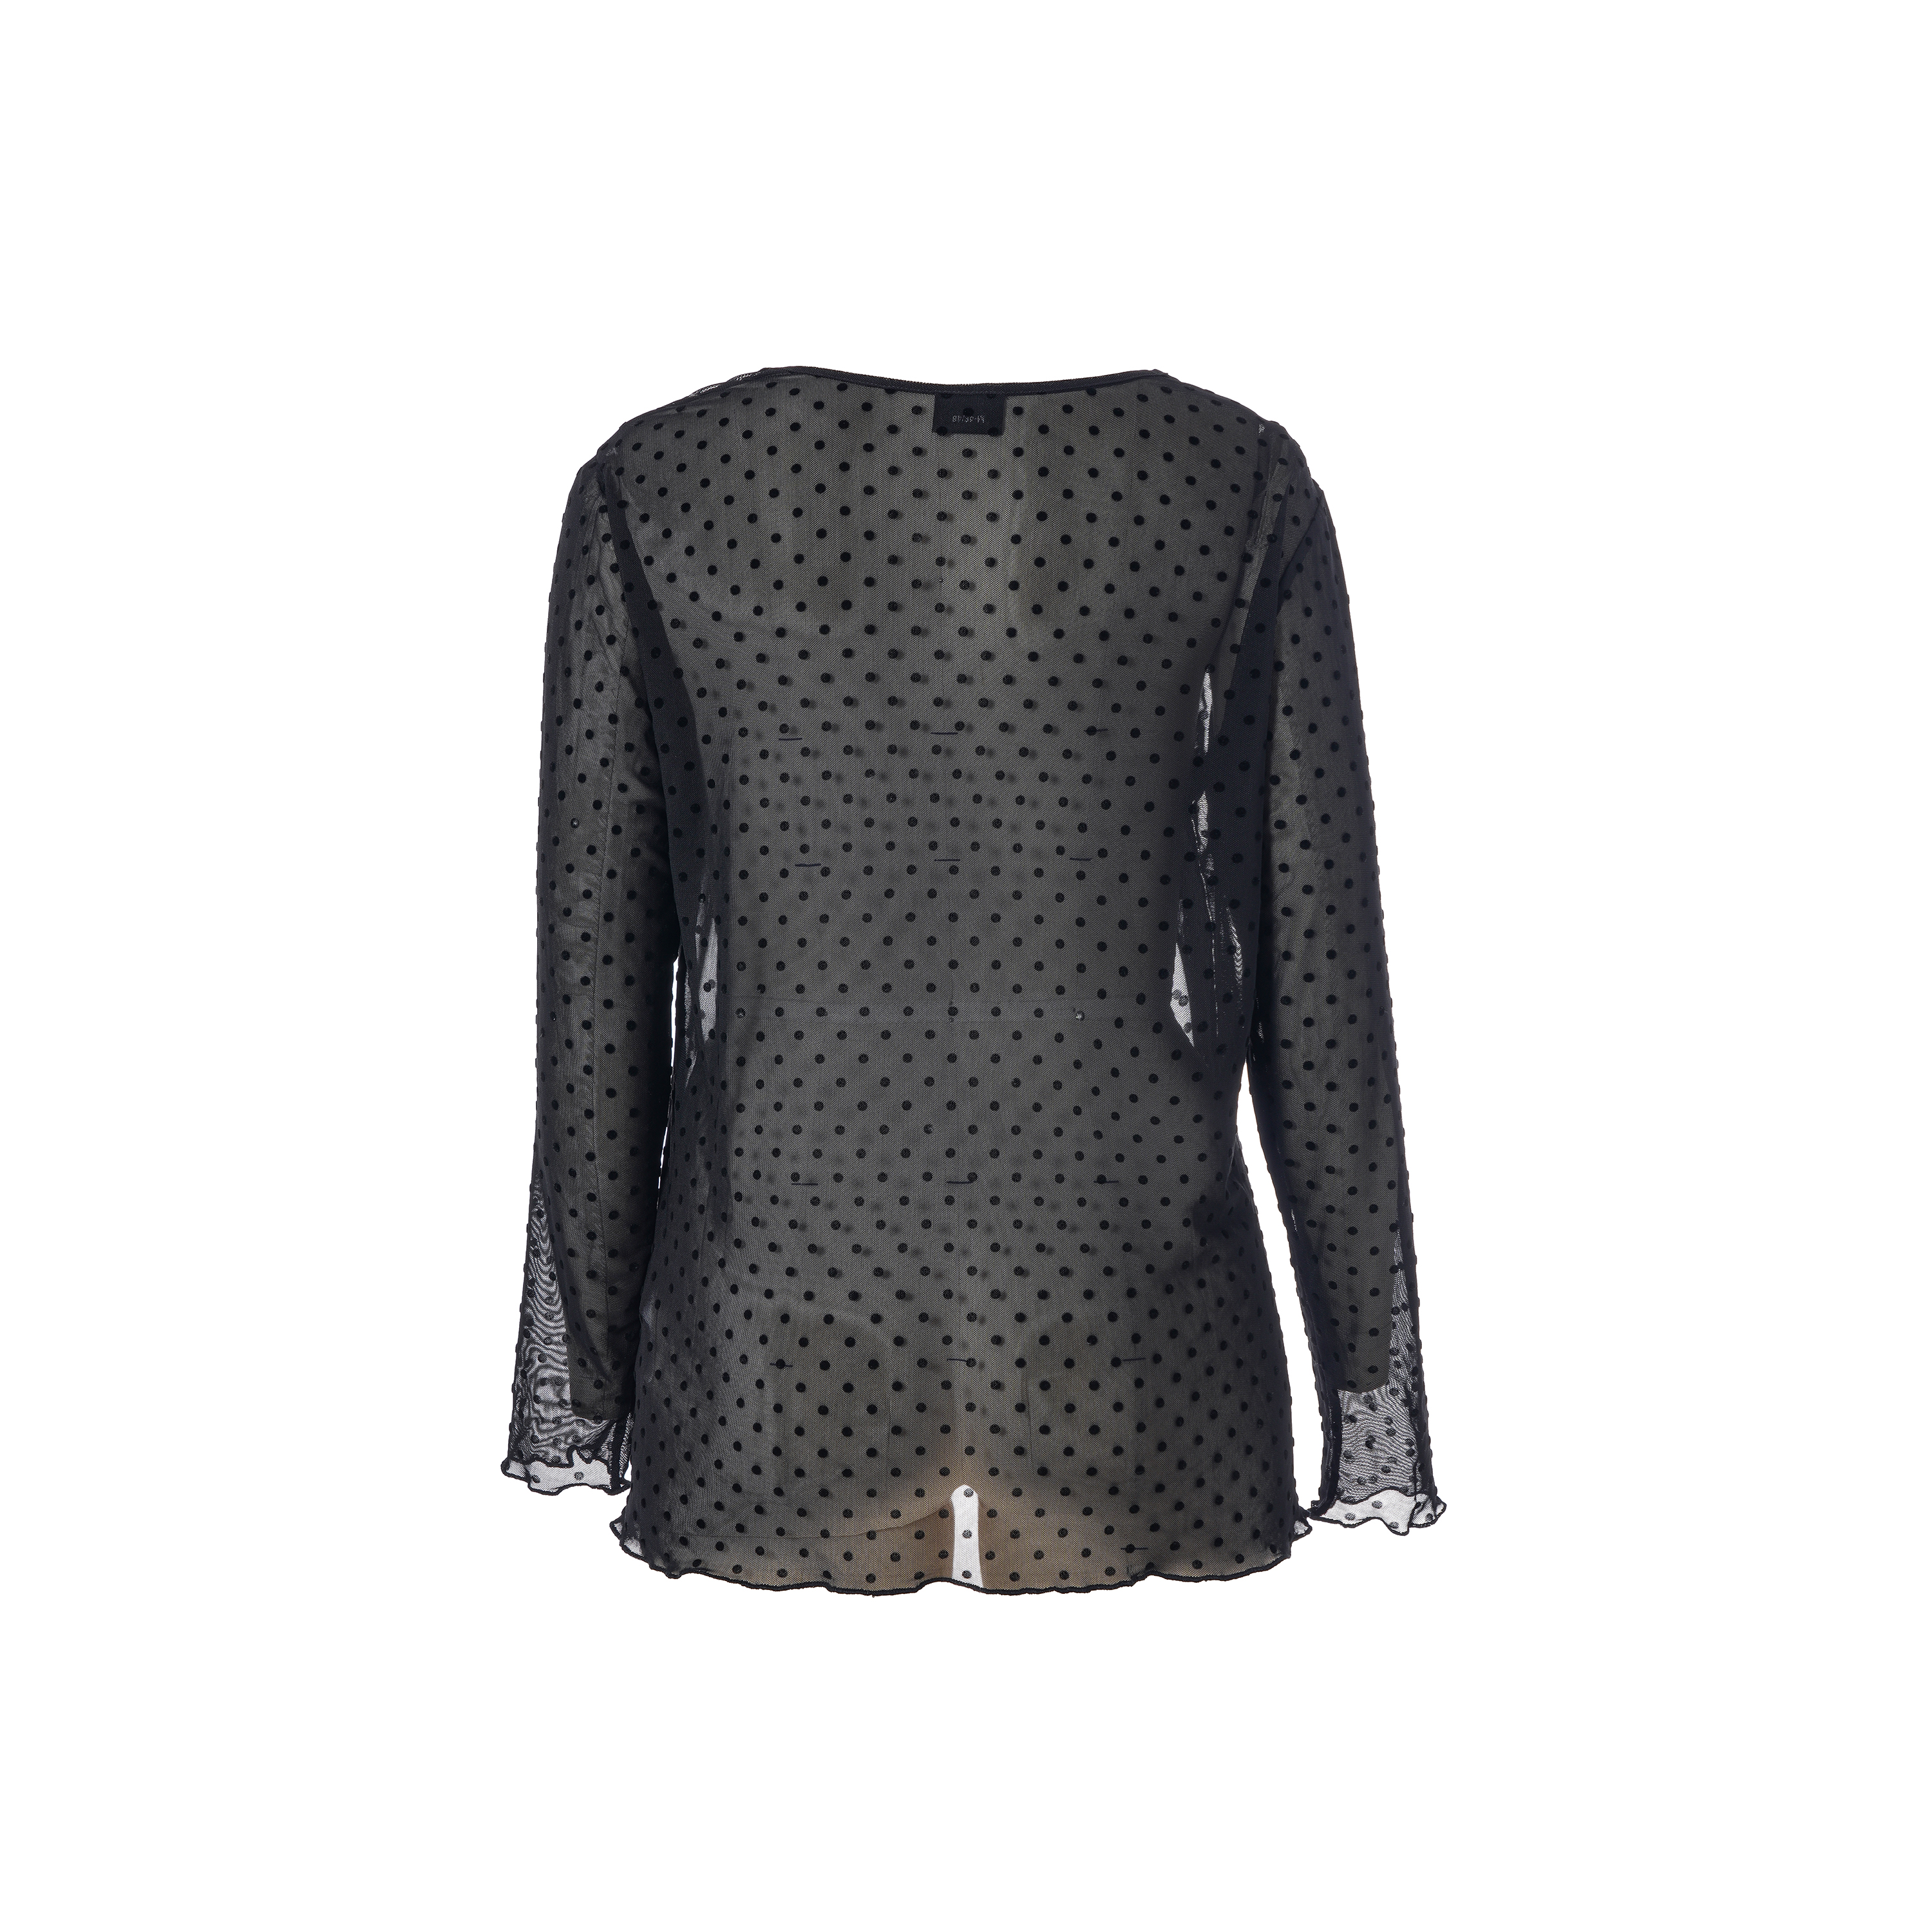 Gozzip Shirt Mesh transparent - Mode Curvy by BiNA große Größen